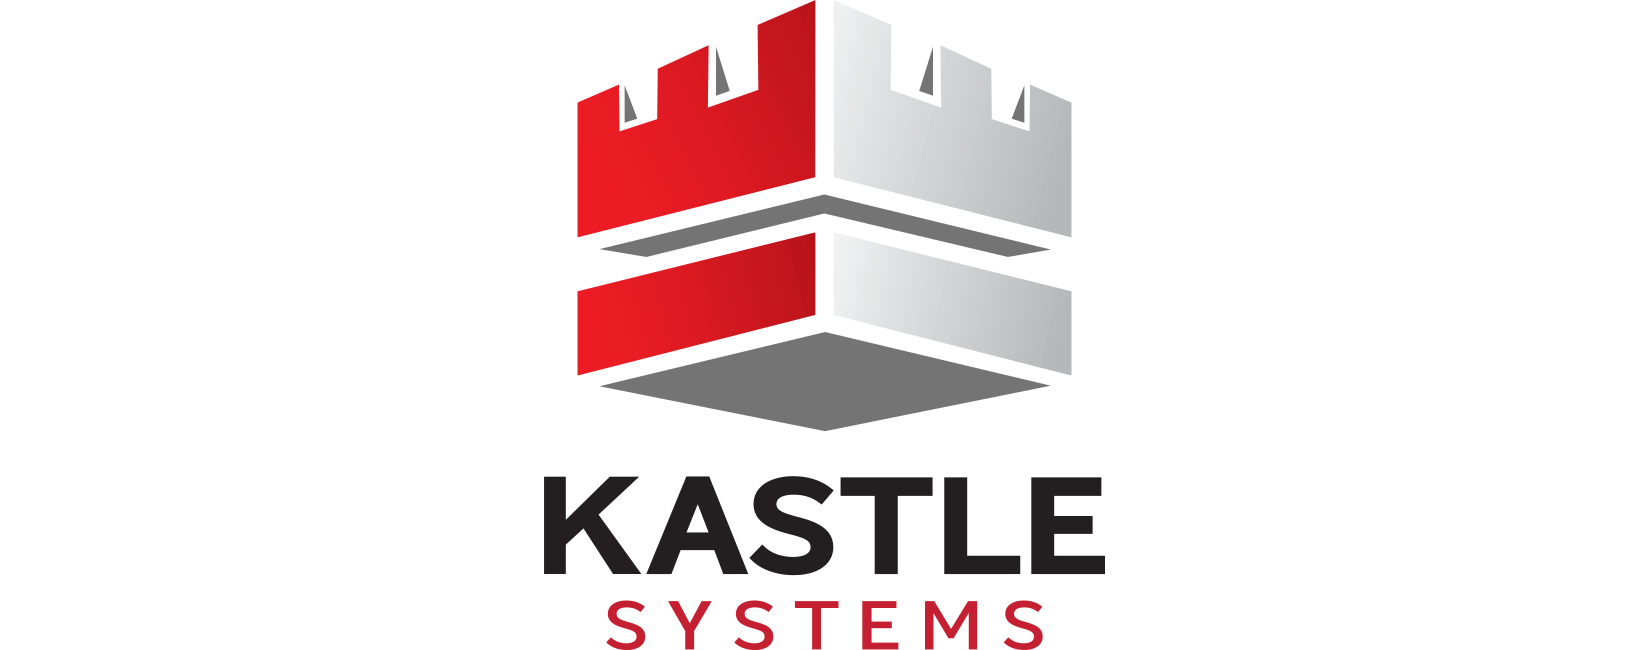 KastleSystems_Logo-1650x650.png